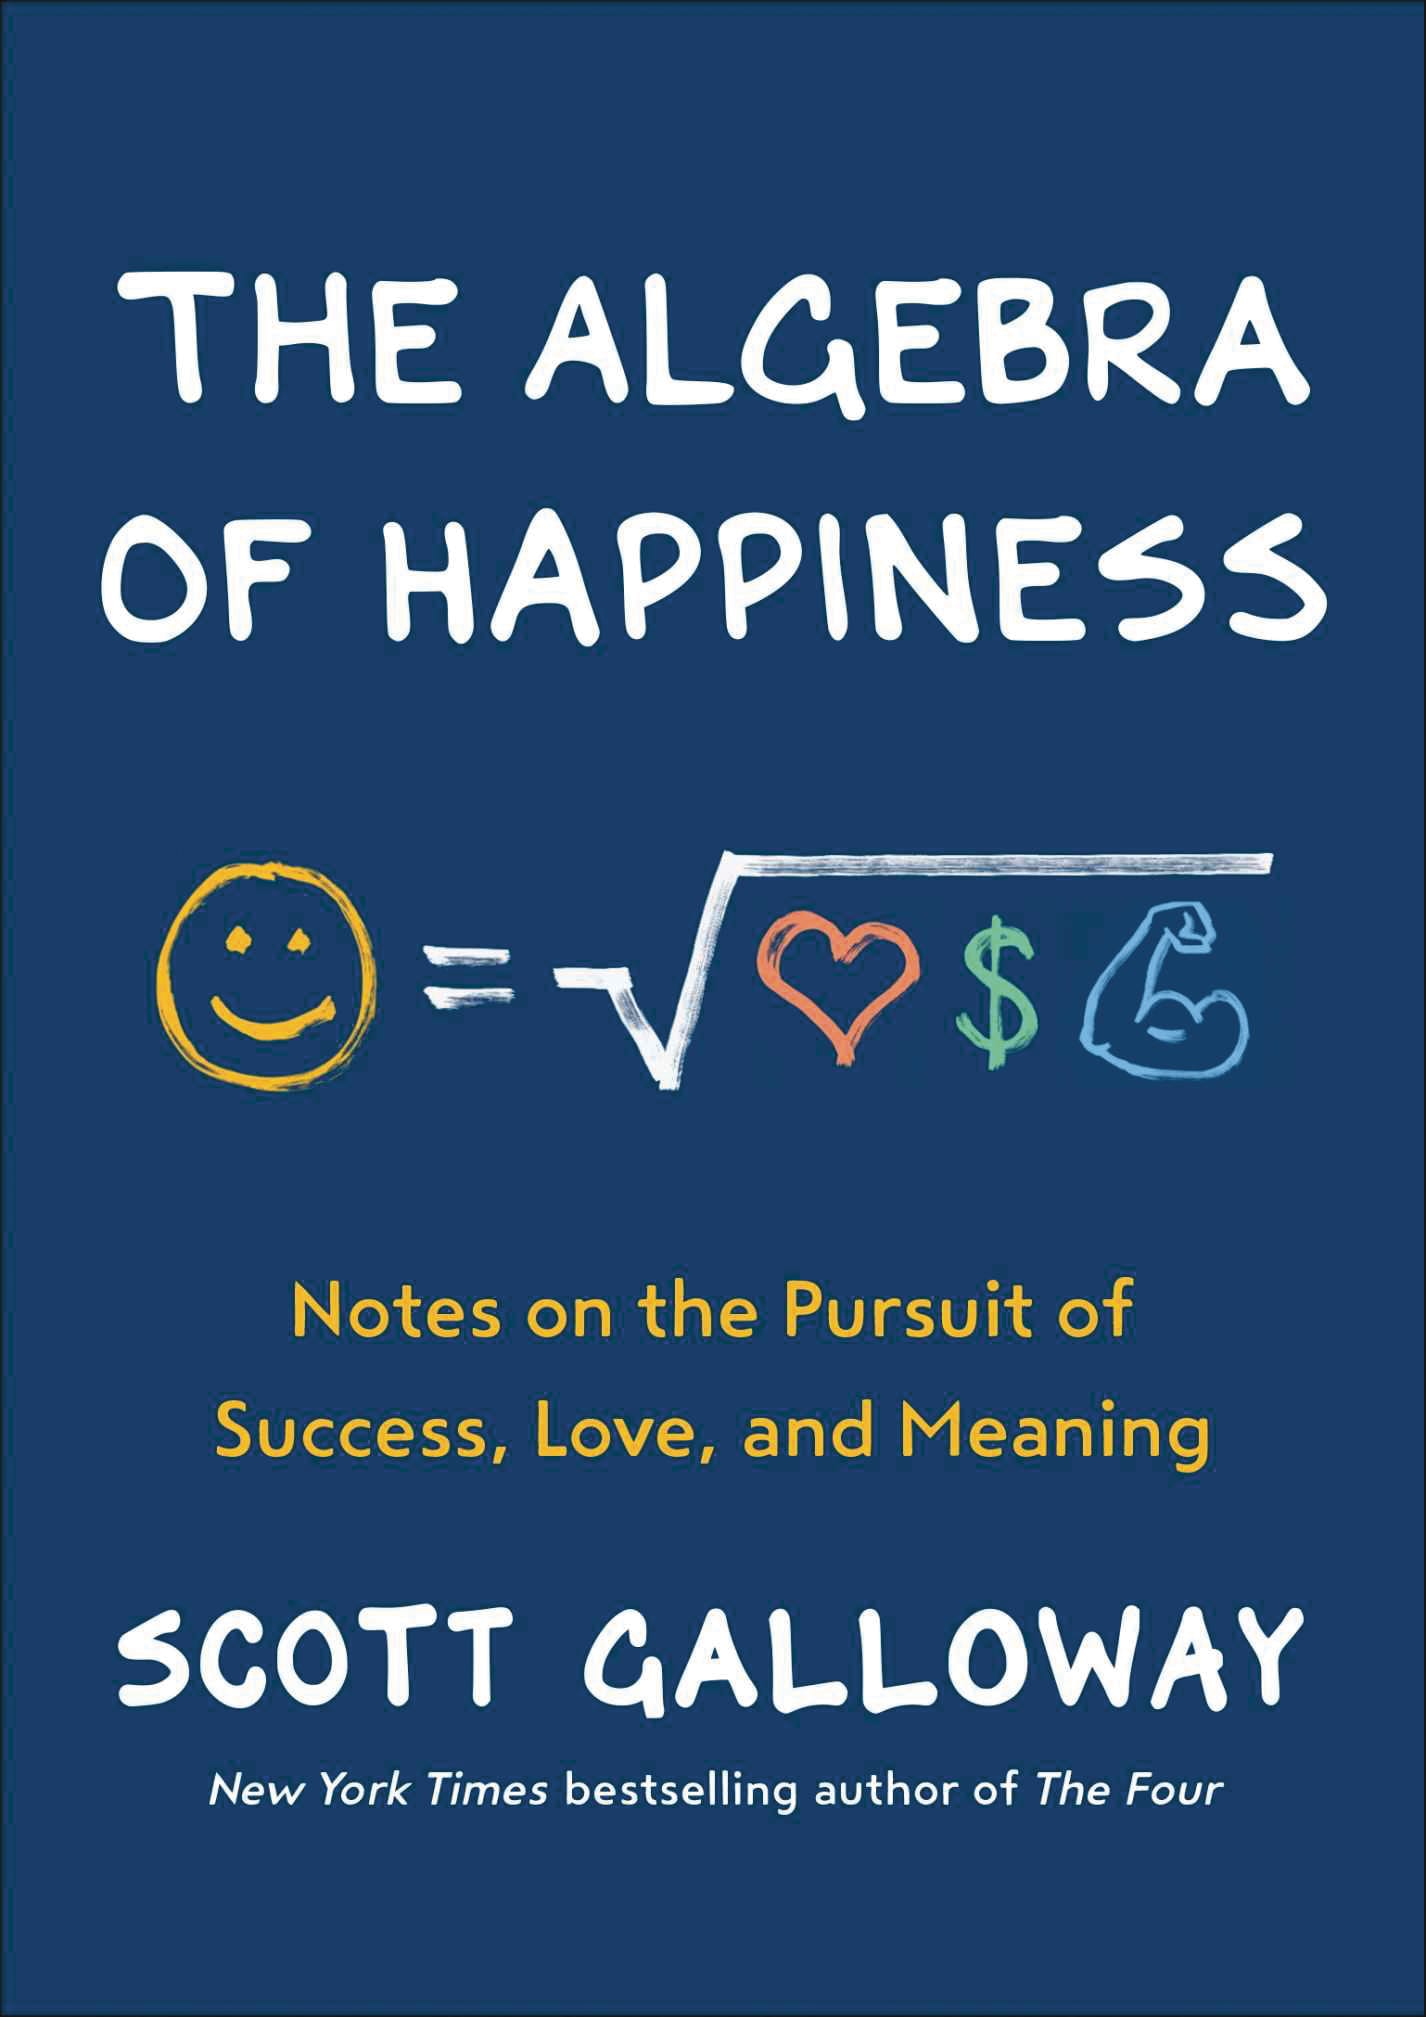 Book of Scott Galloway, MBA 92